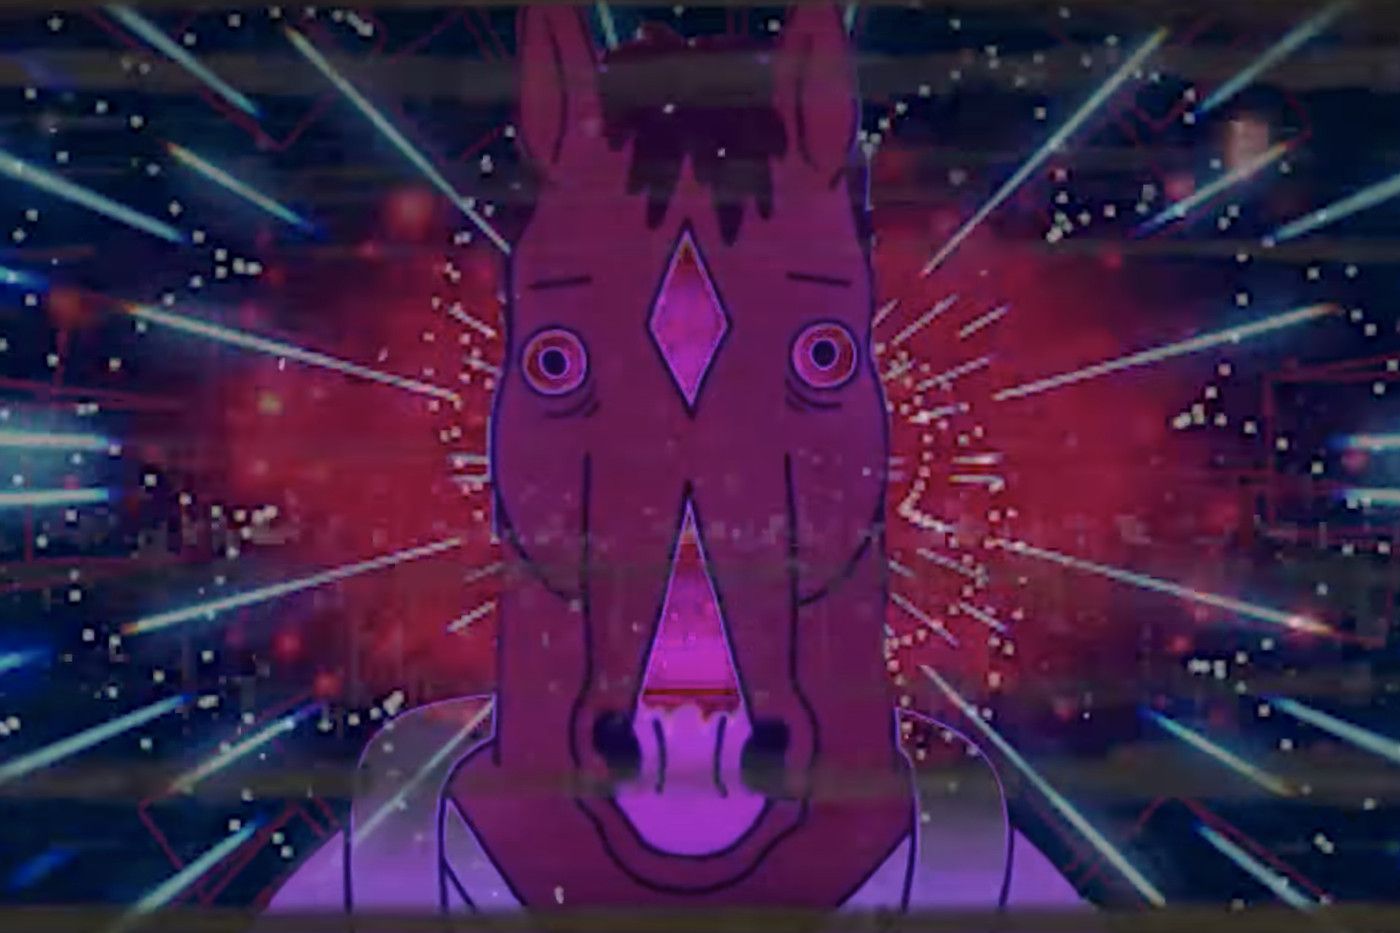 YouTube's new vaporwave scene inspired by Rick & Morty, BoJack